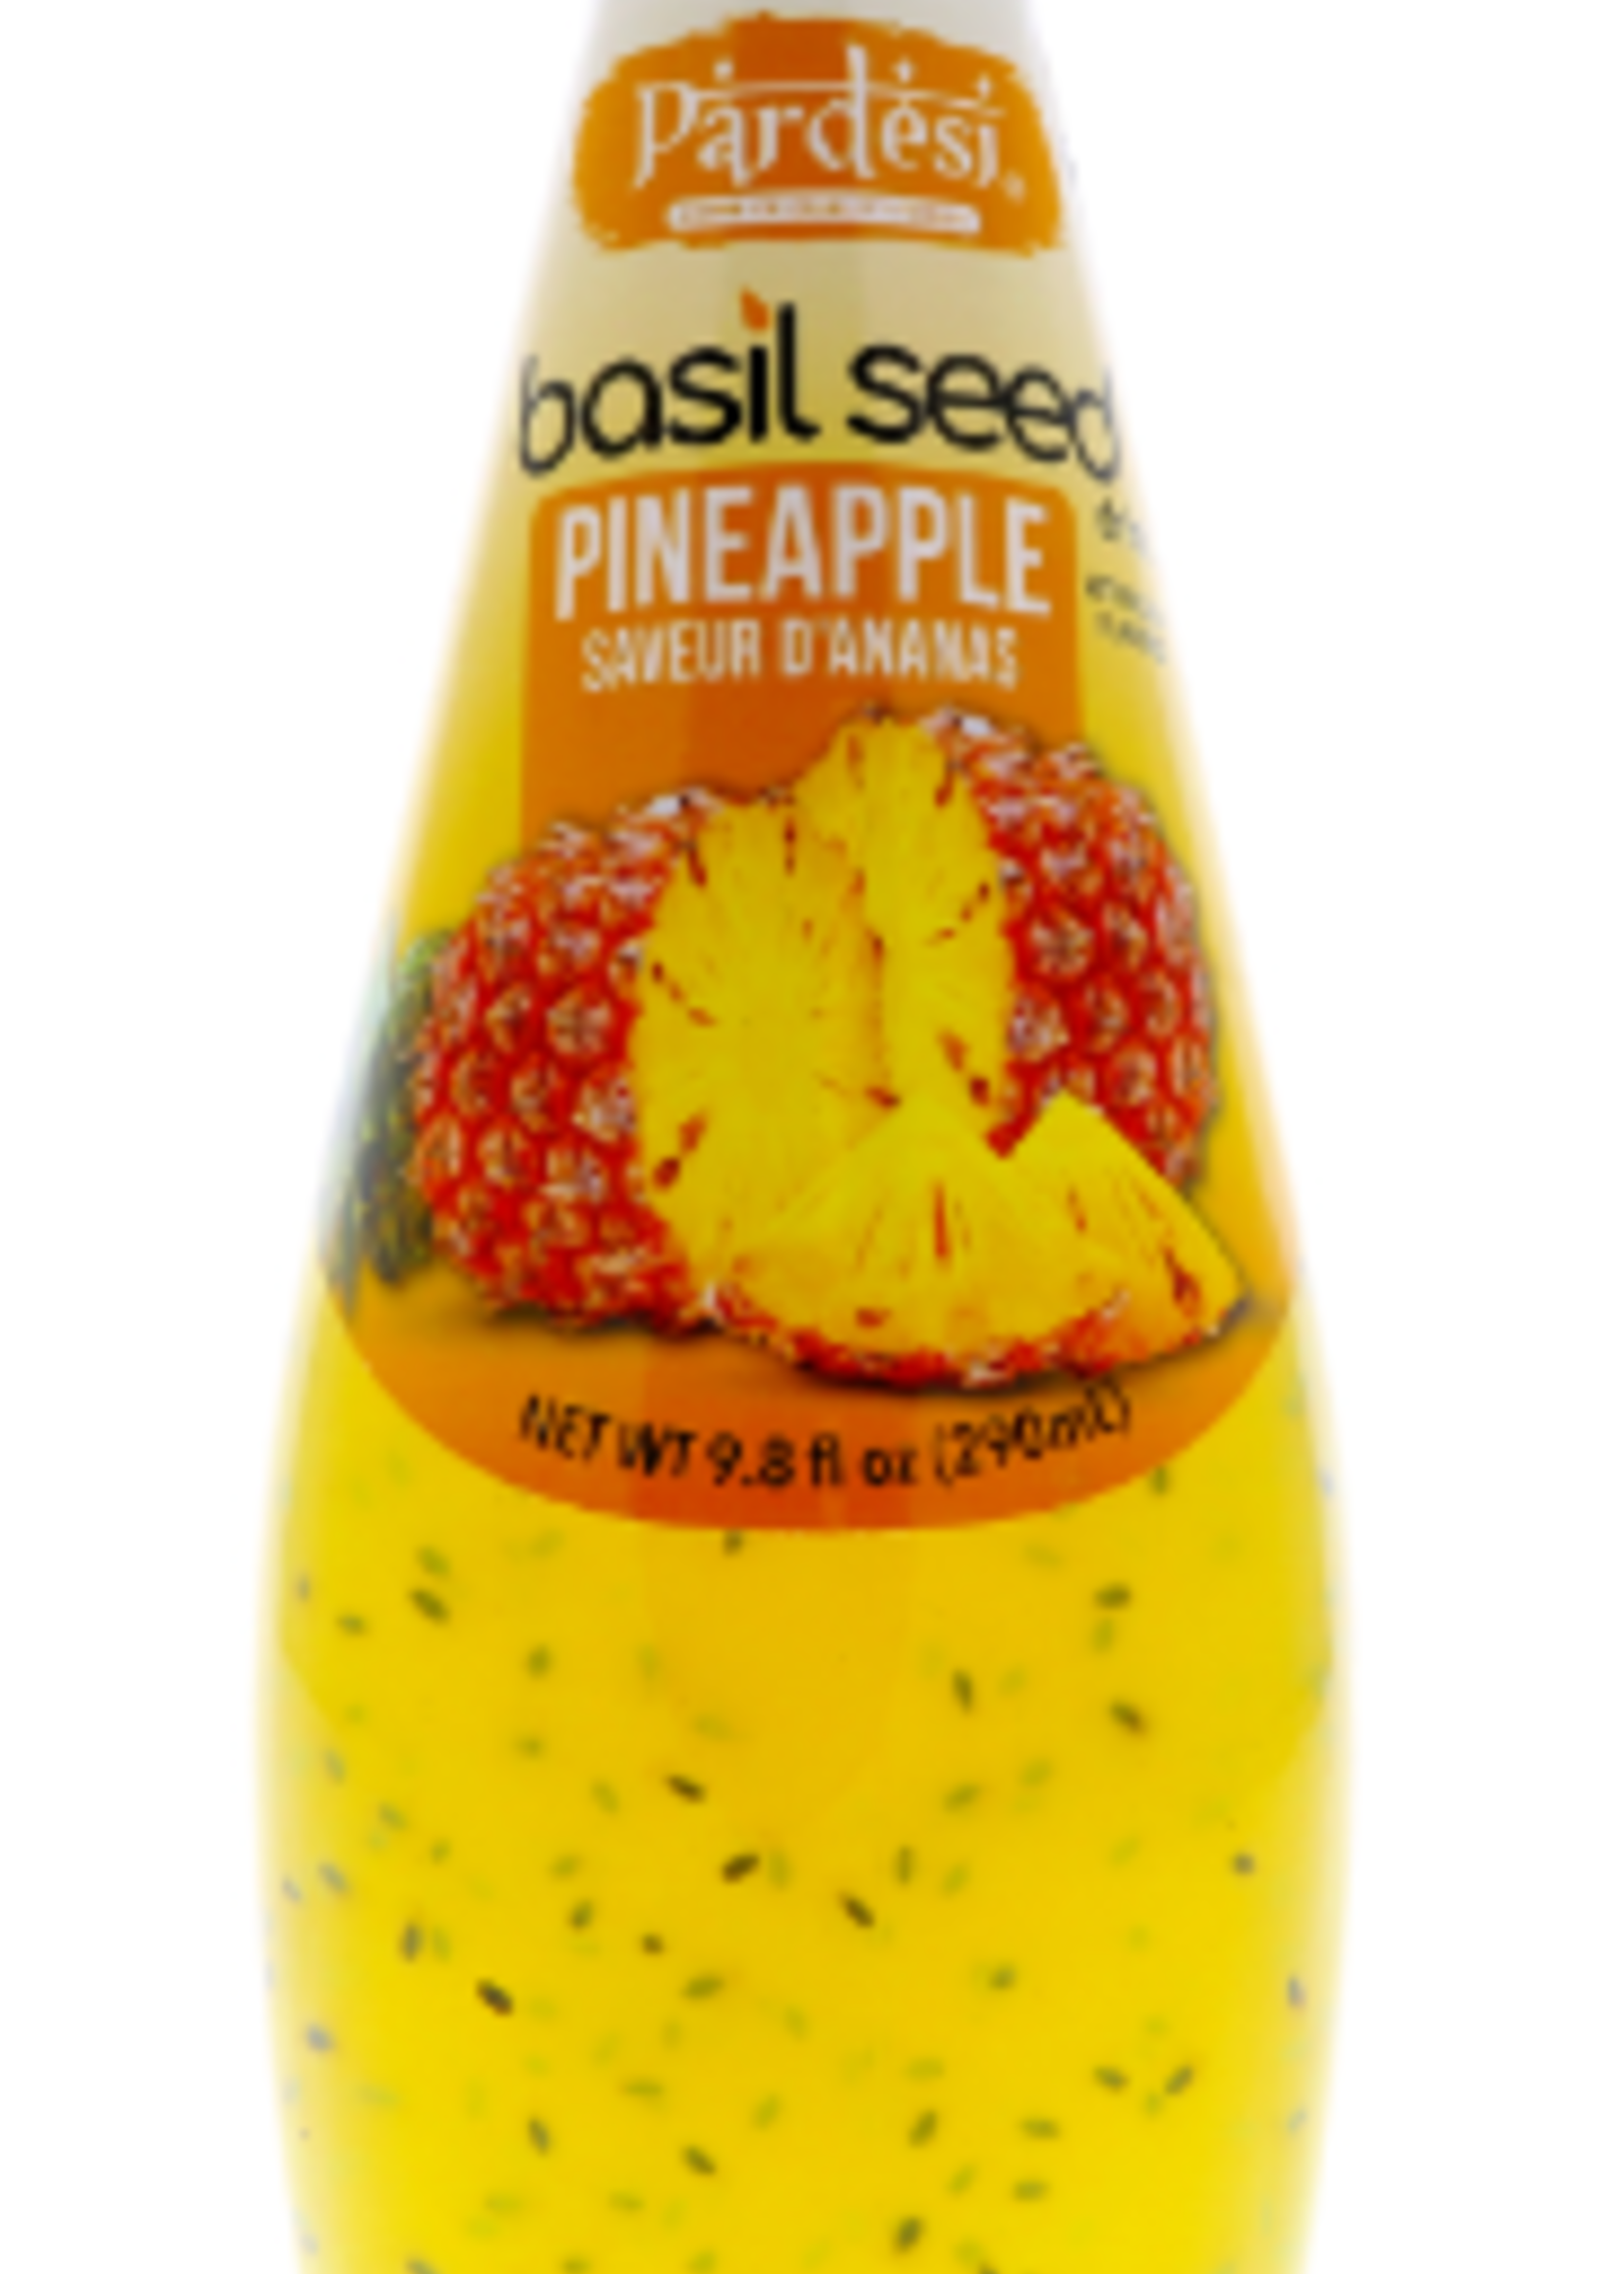 Pardesi Honey Drink with Basilseed 290ml